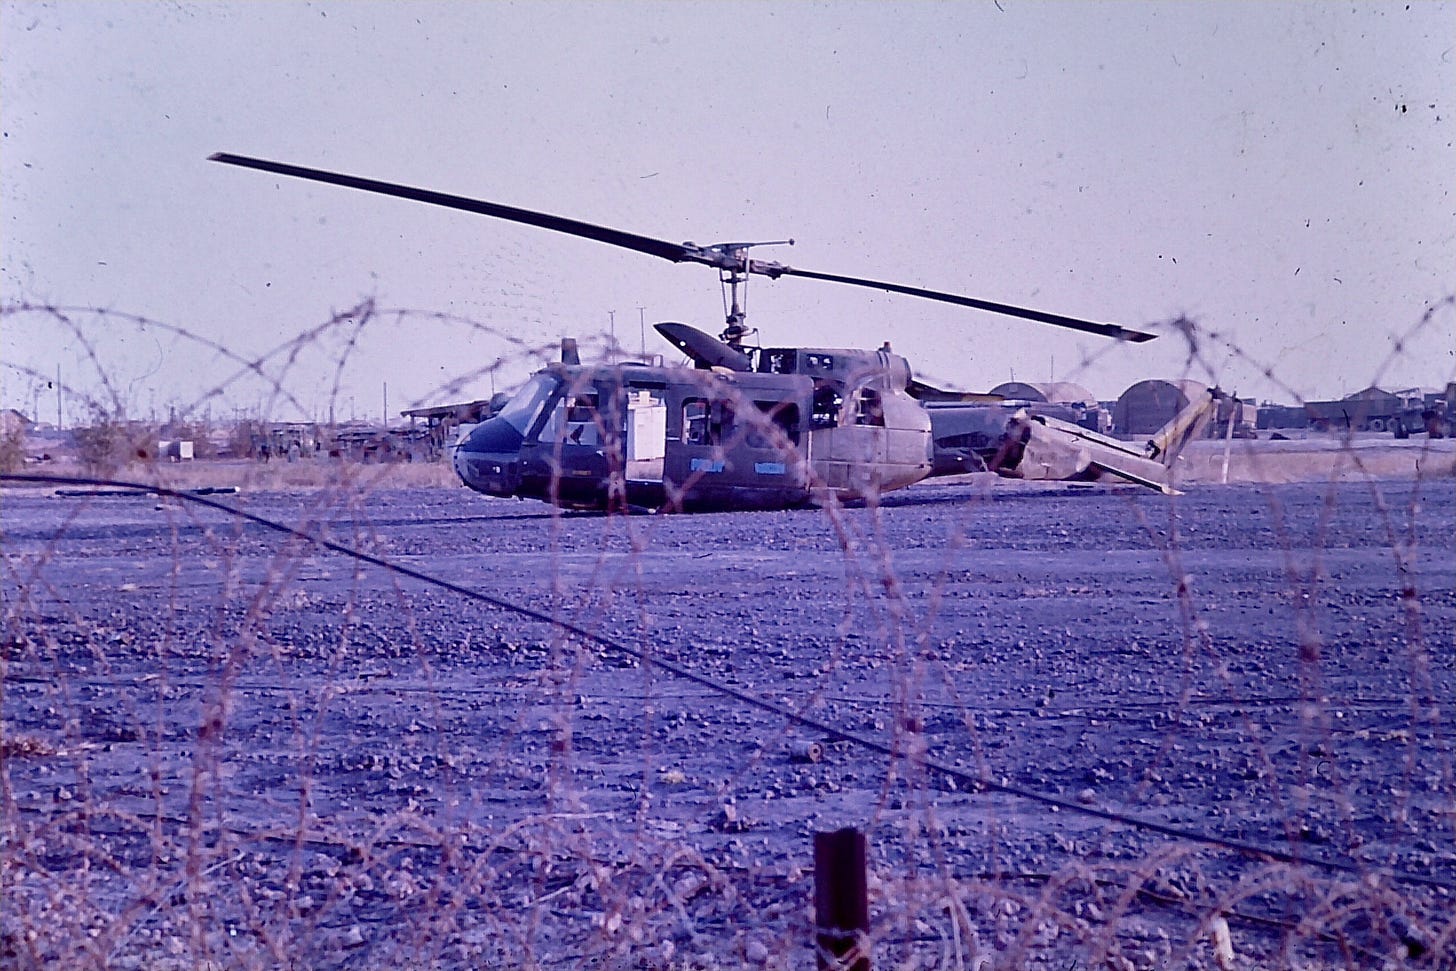 Crashed helicopter, Củ Chi, Vietnam. 1968.